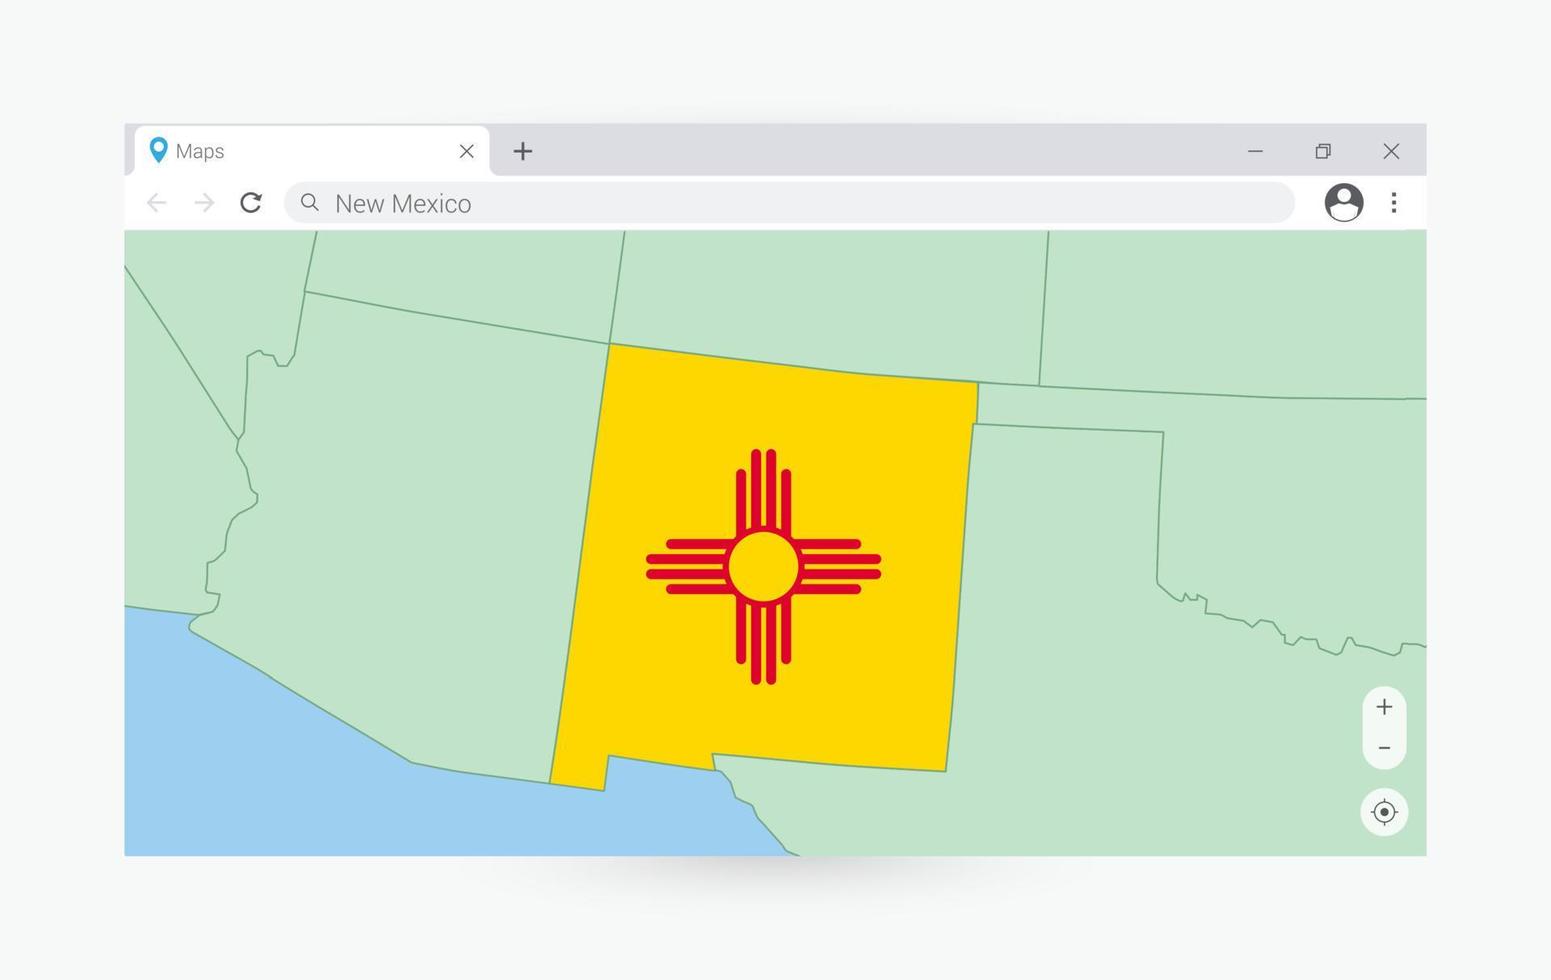 navegador ventana con mapa de nuevo México, buscando nuevo mexico en Internet. vector